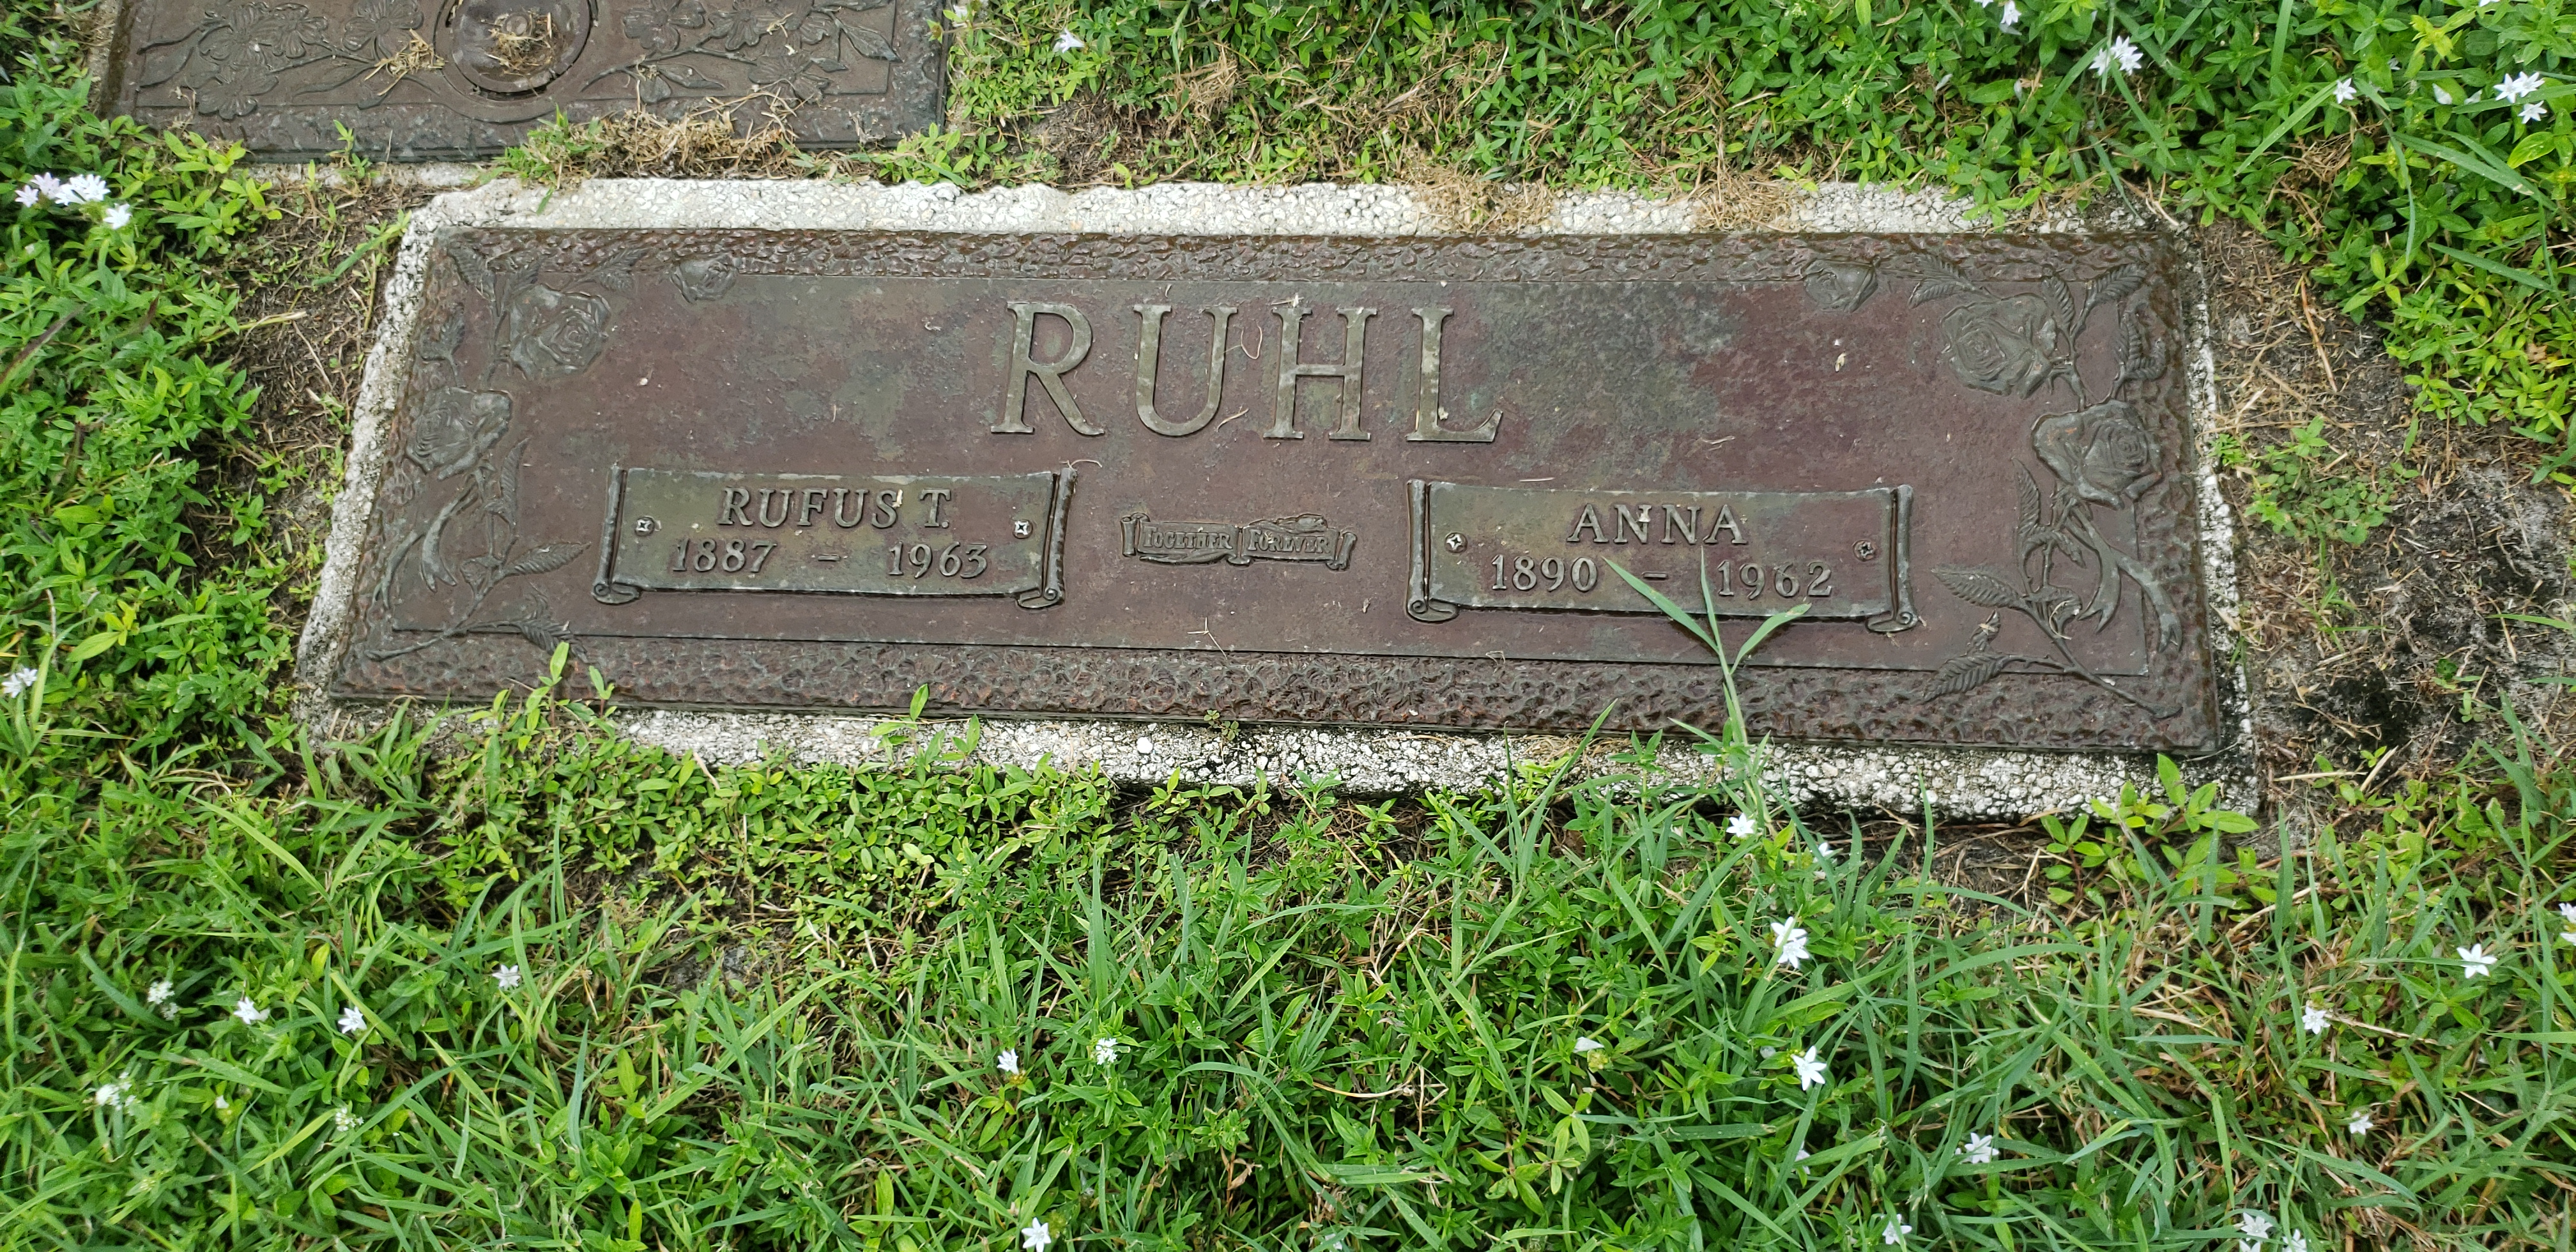 Rufus T Ruhl